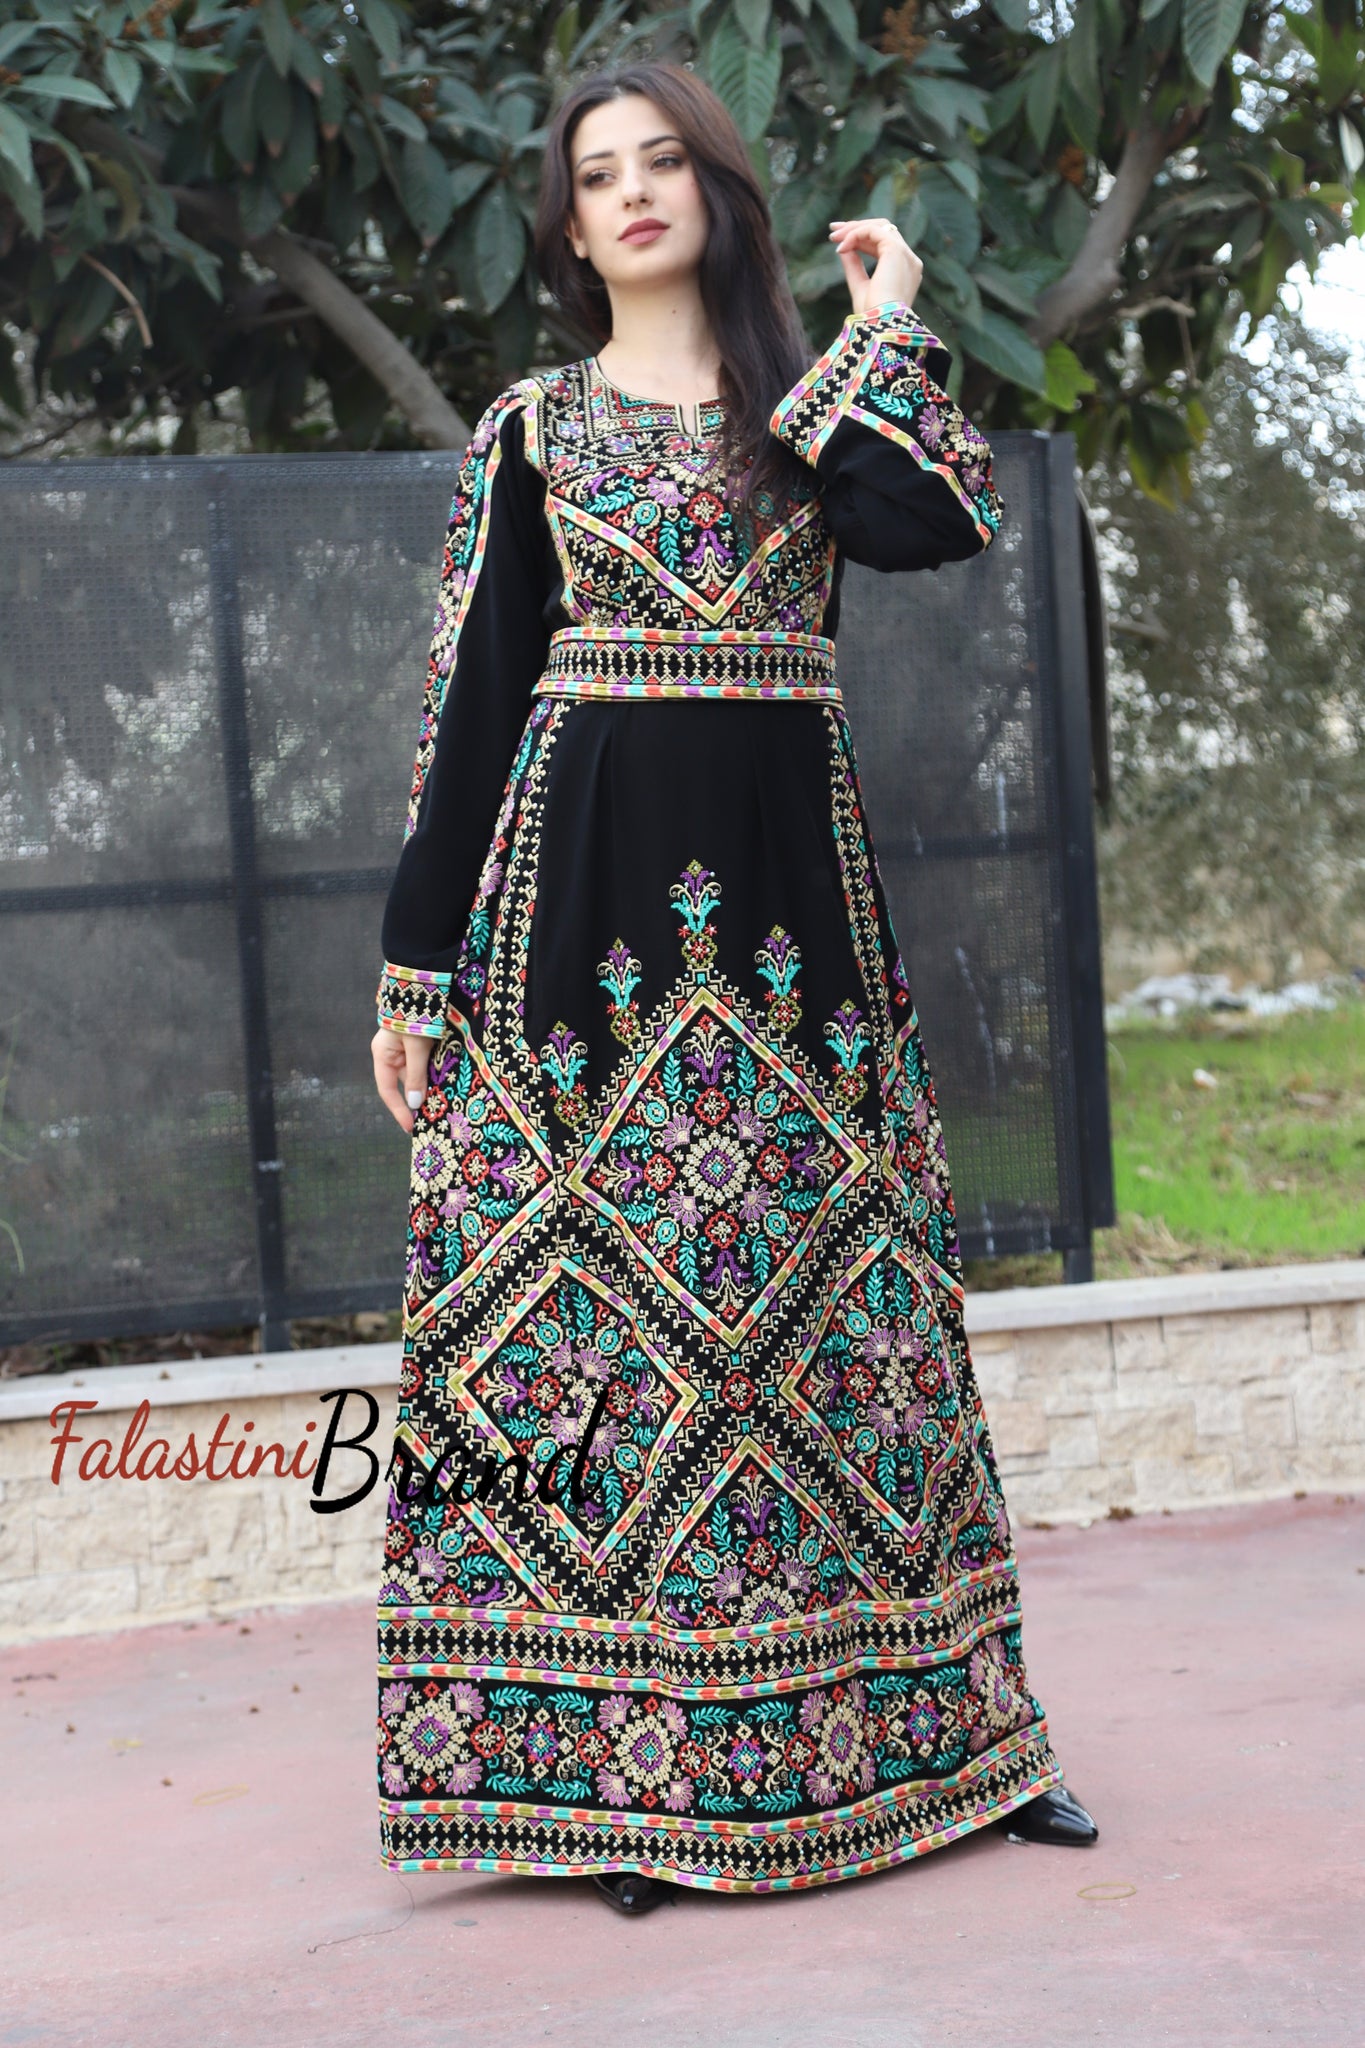 palestinian dress